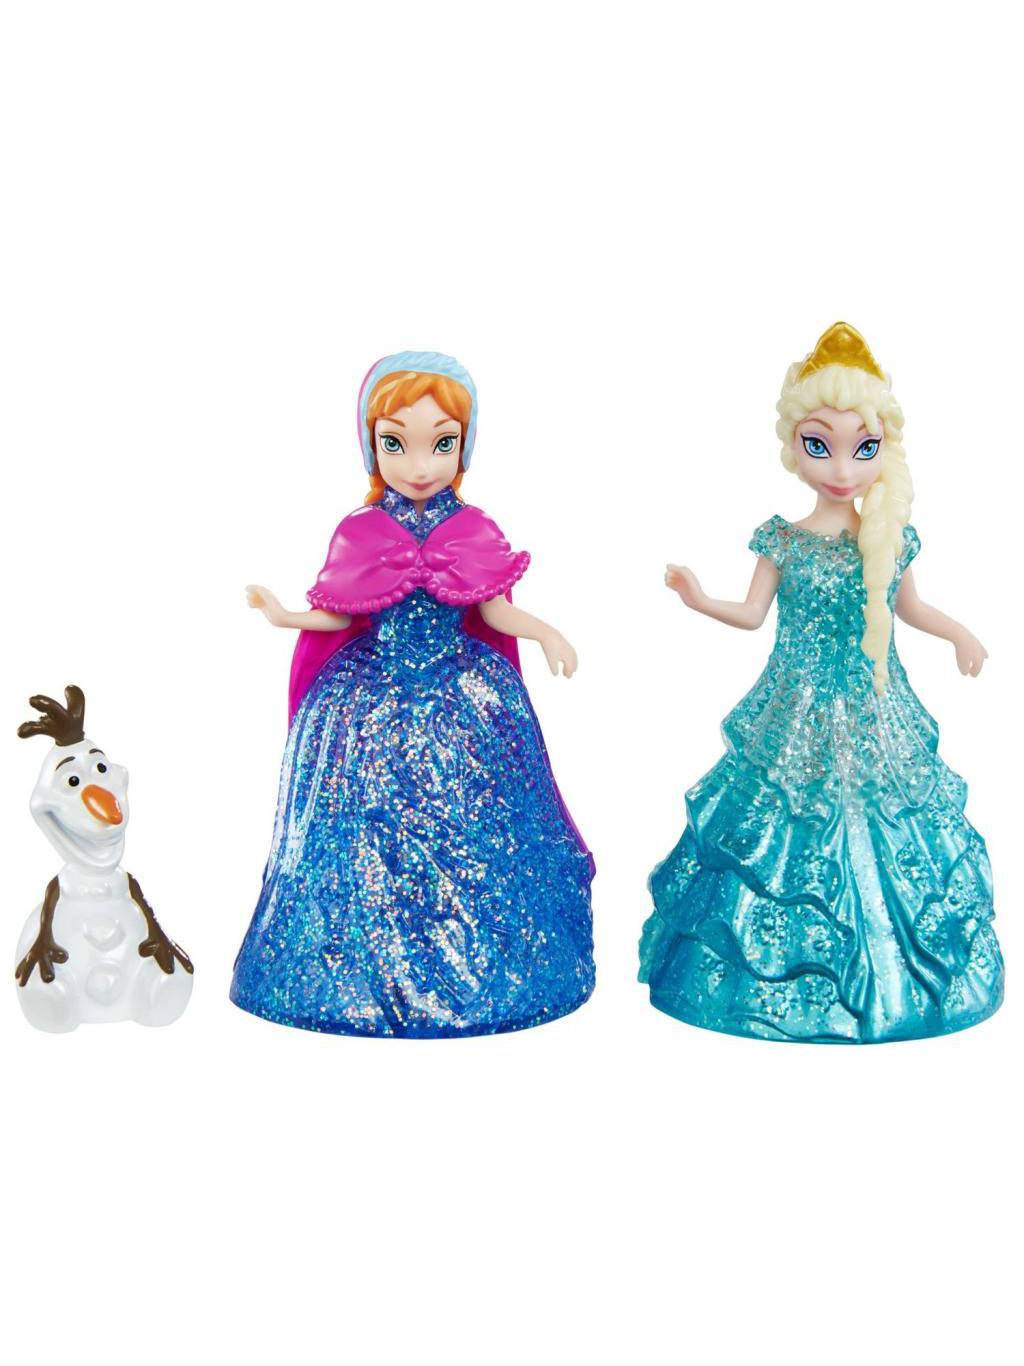 Disney Frozen Glitter Glider Anna, Elsa and Olaf Doll Set - image 1 of 3